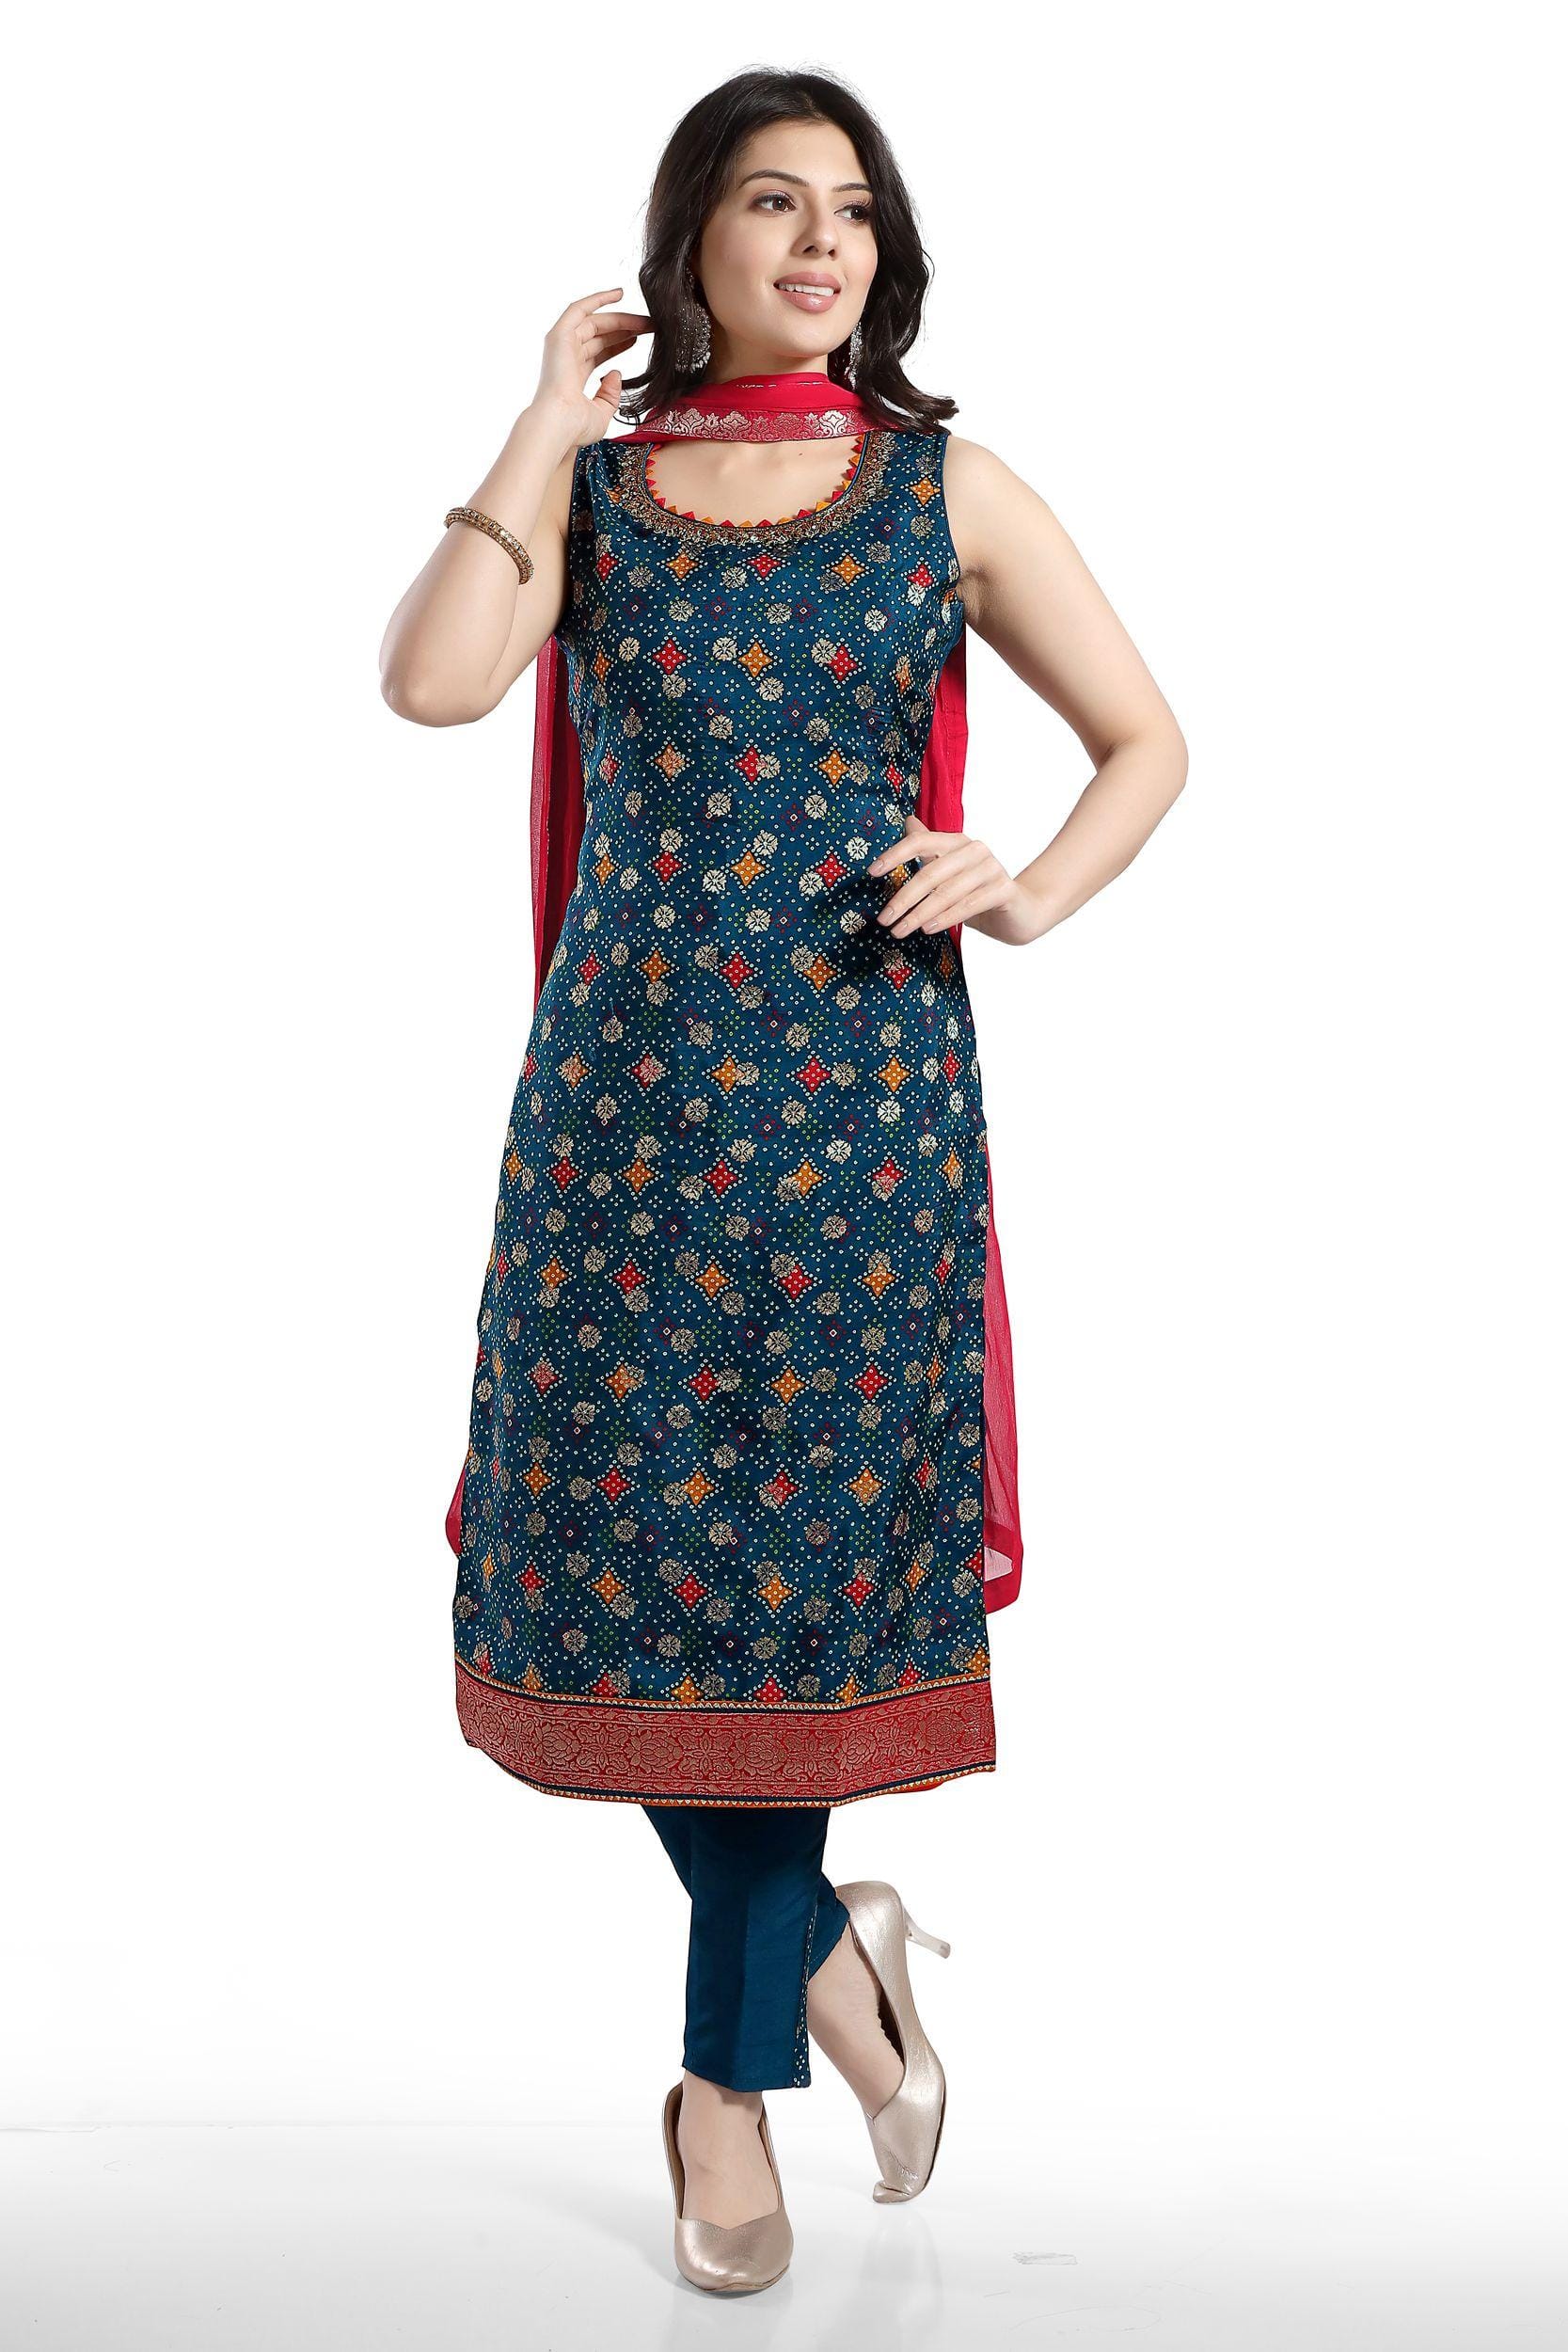 BANDHANI SAPECIAL VOL-3 BY MAYUR CREATION 3001 TO 3010 SERIES DESIGNER  BEAUTIFUL FANCY PRINTED COTT… | Dress design patterns, Bandhani dress, Bandhani  dress pattern